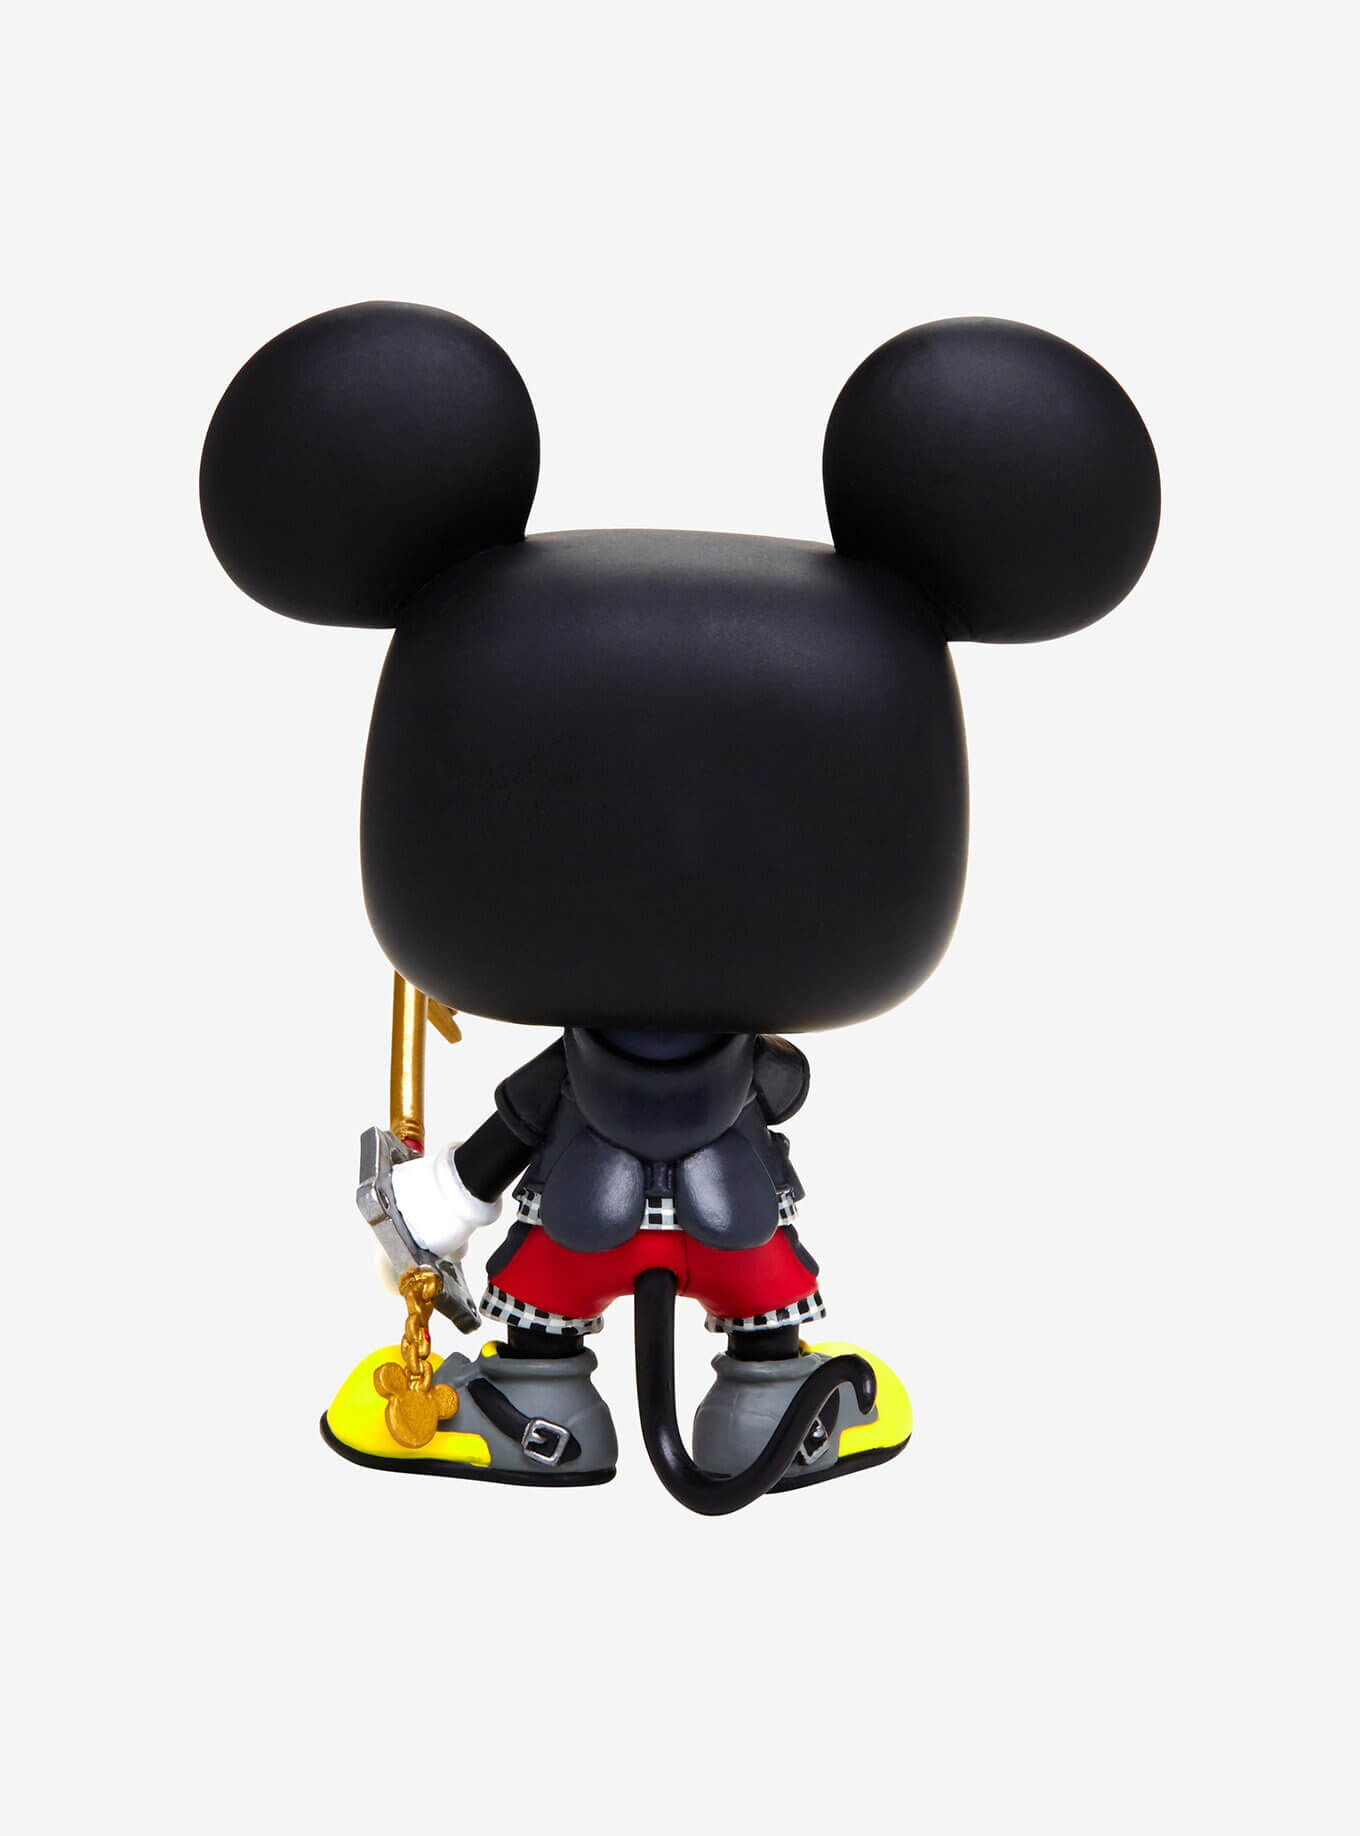 Mickey #489 - Kingdom Hearts - Funko Pop! Games